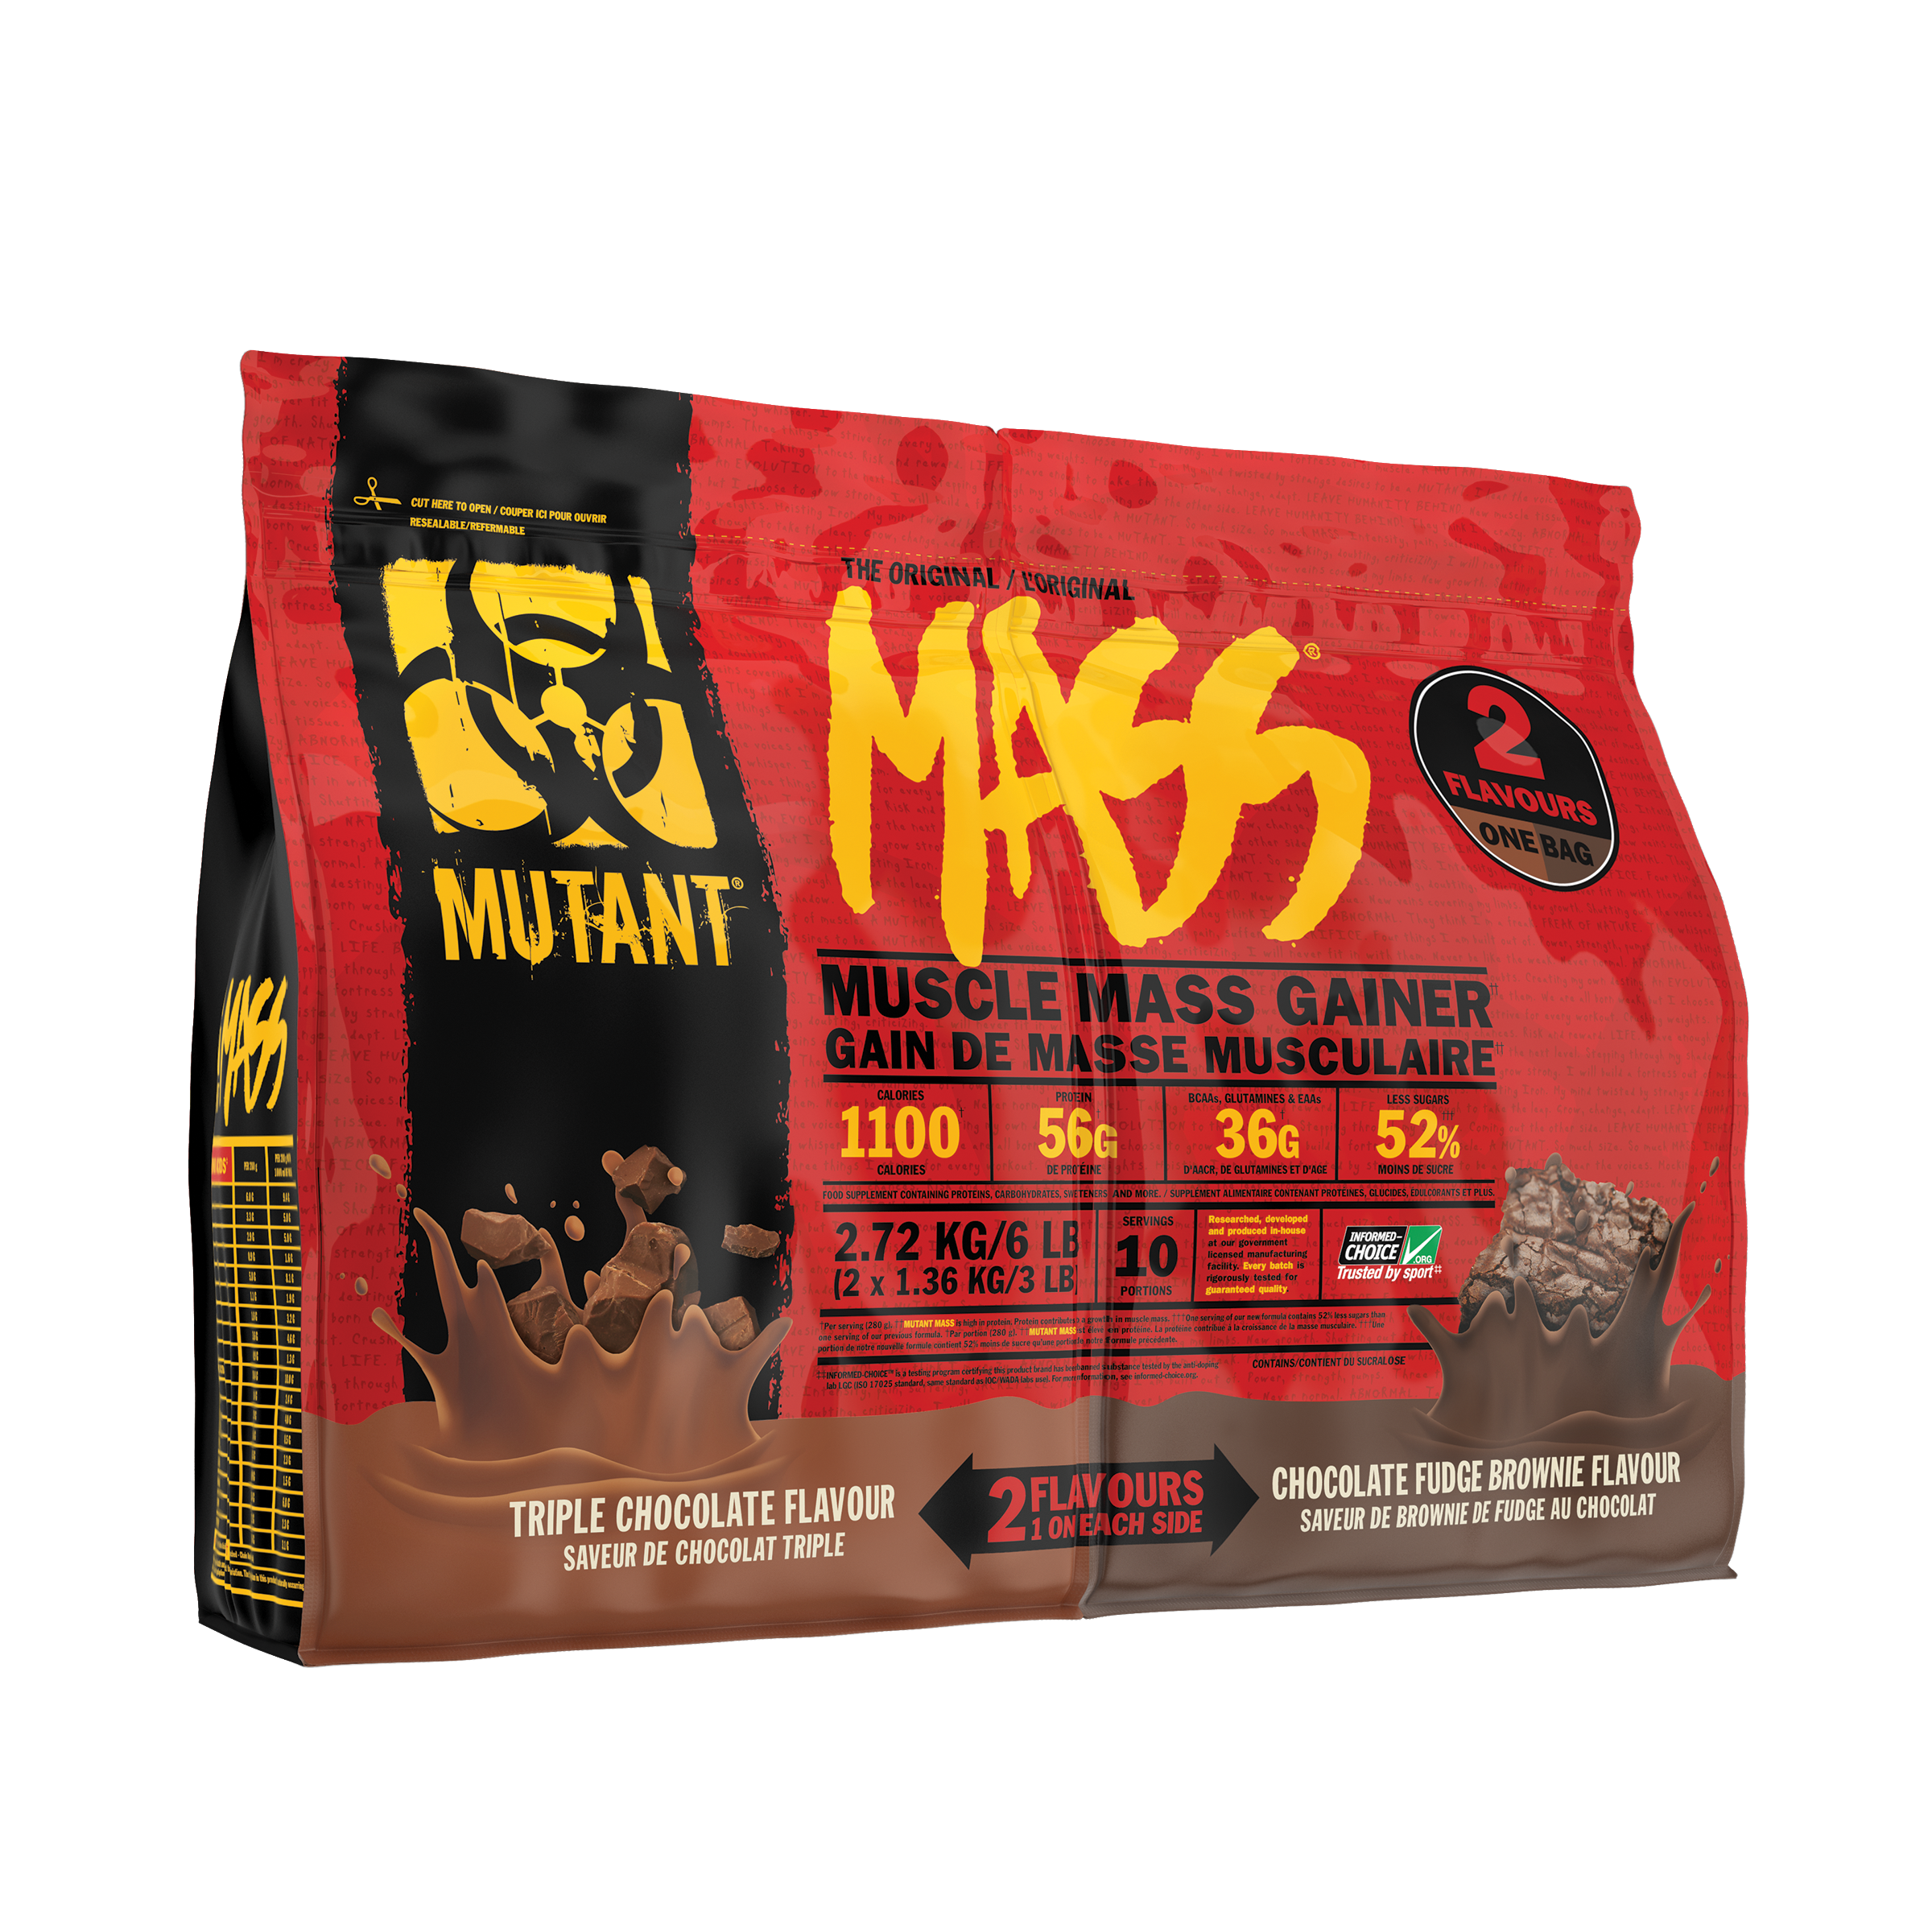 Mutant MASS Dual Chamber - 2 FLAVOURS in 1 BAG (6lbs) Mass Gainers Triple Chocolate & Chocolate Fudge Brownie Mutant